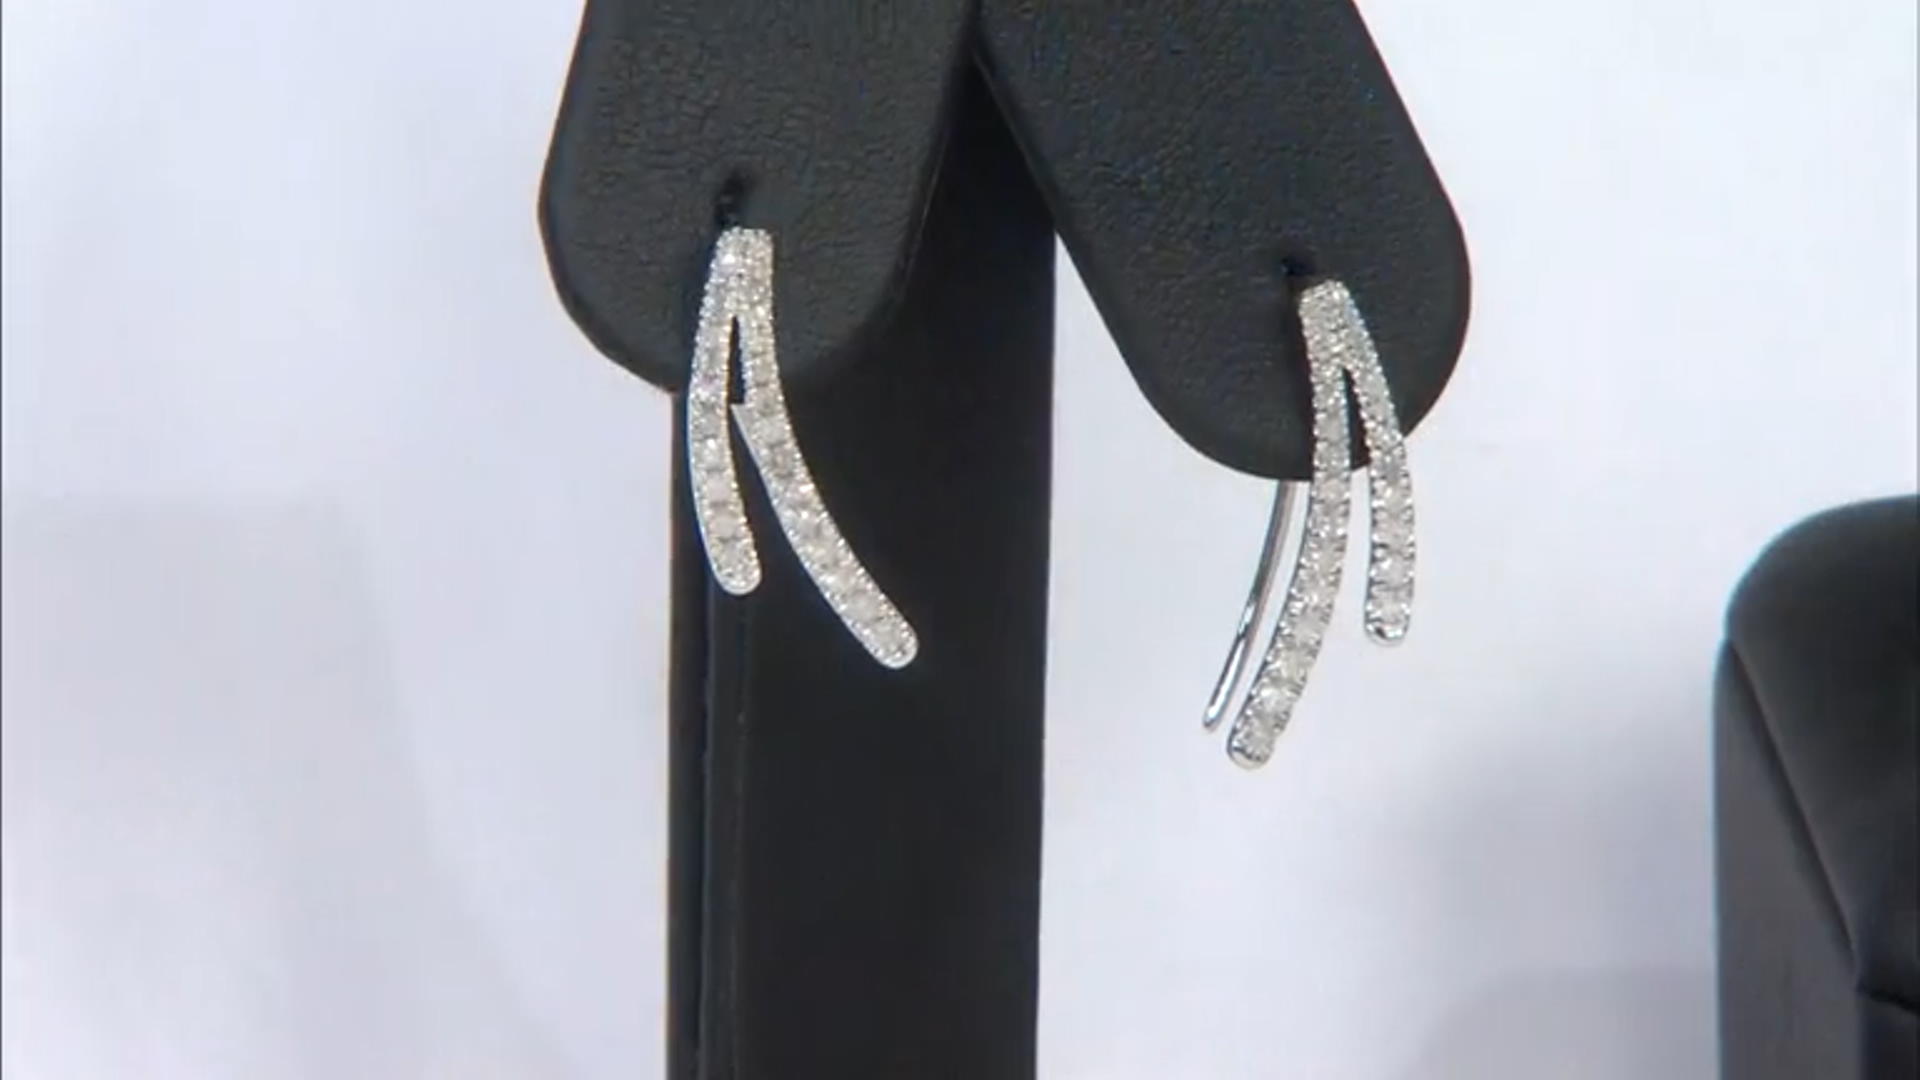 White Diamond 14k White Gold Drop Earrings 0.40ctw Video Thumbnail